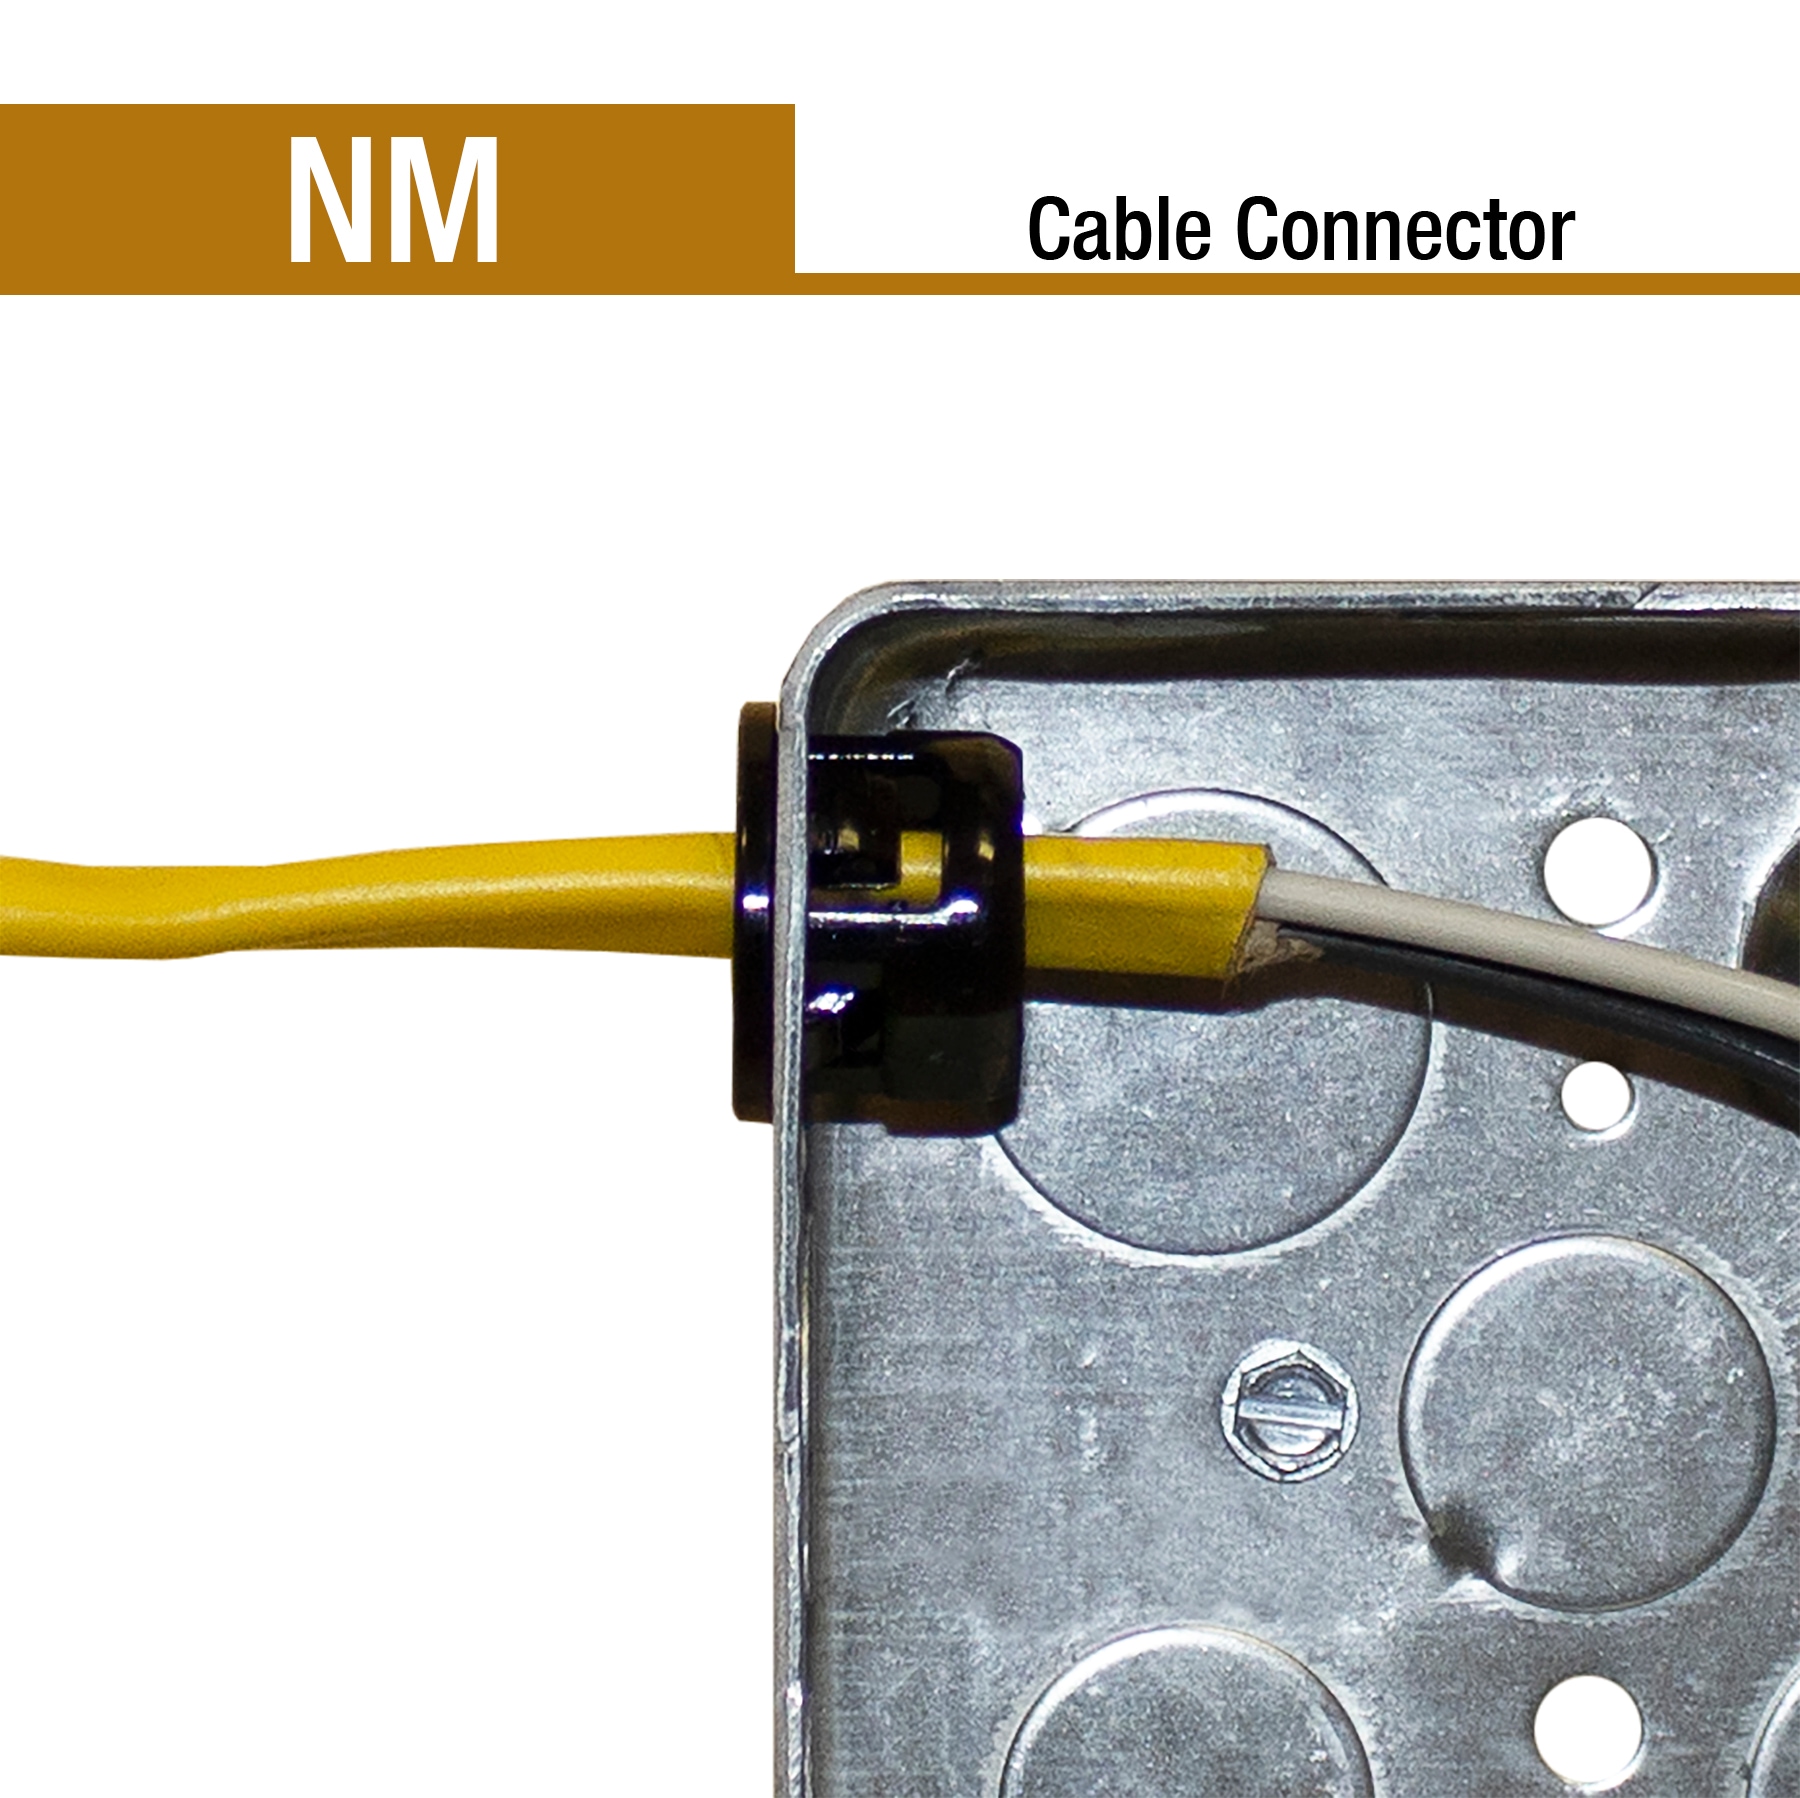 3/4'' Snap-In Non-Metallic Cable Connector